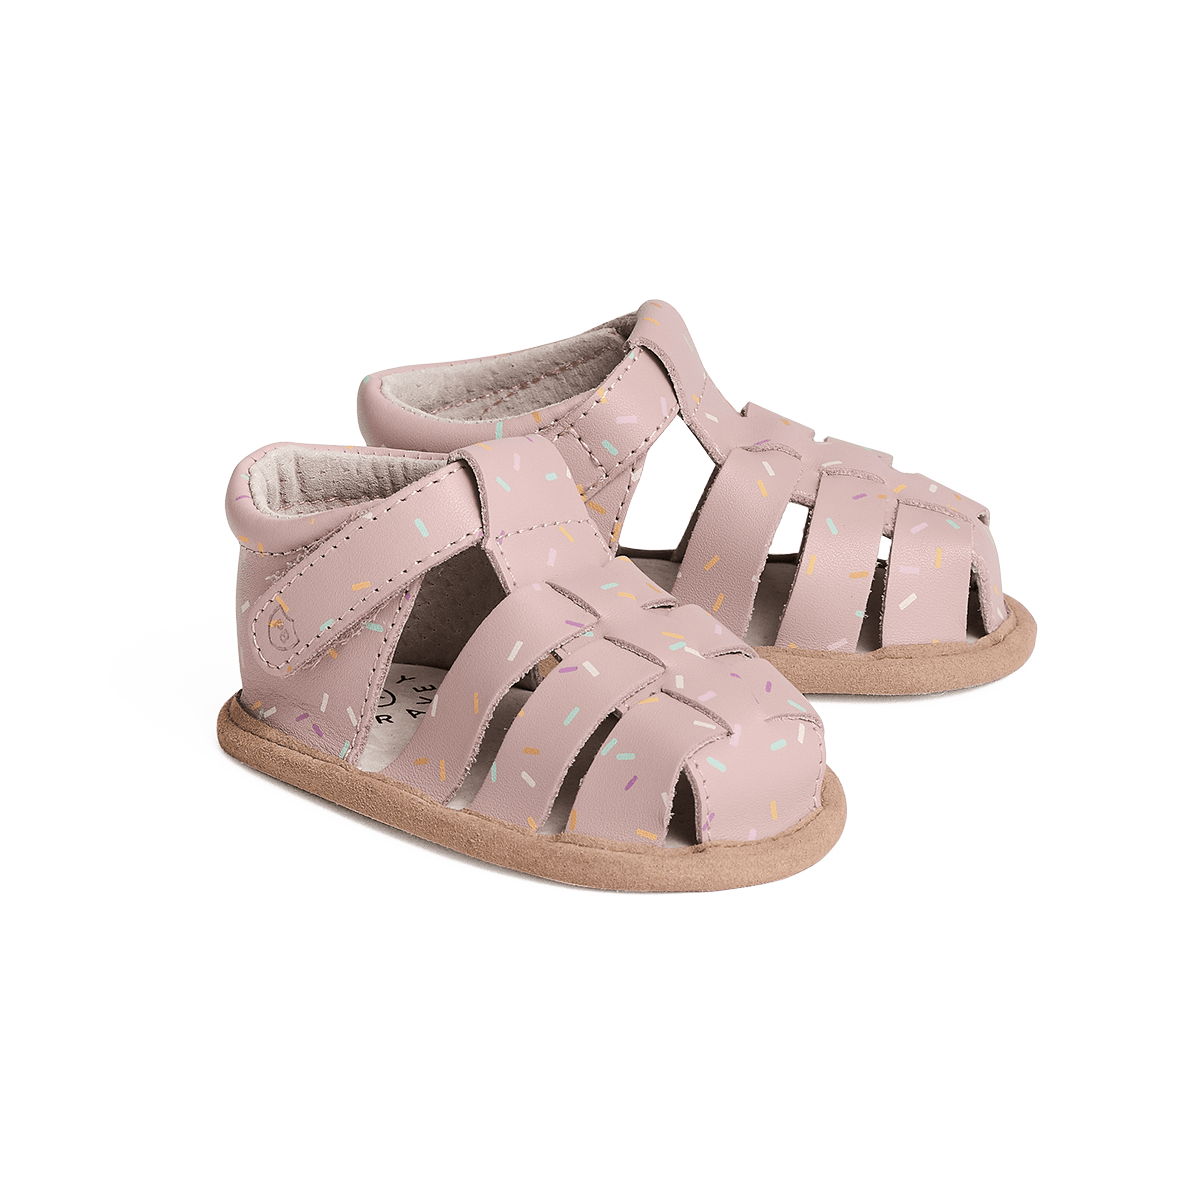 Pretty Brave Baby Shoes Rio Sandal in Sprinkles